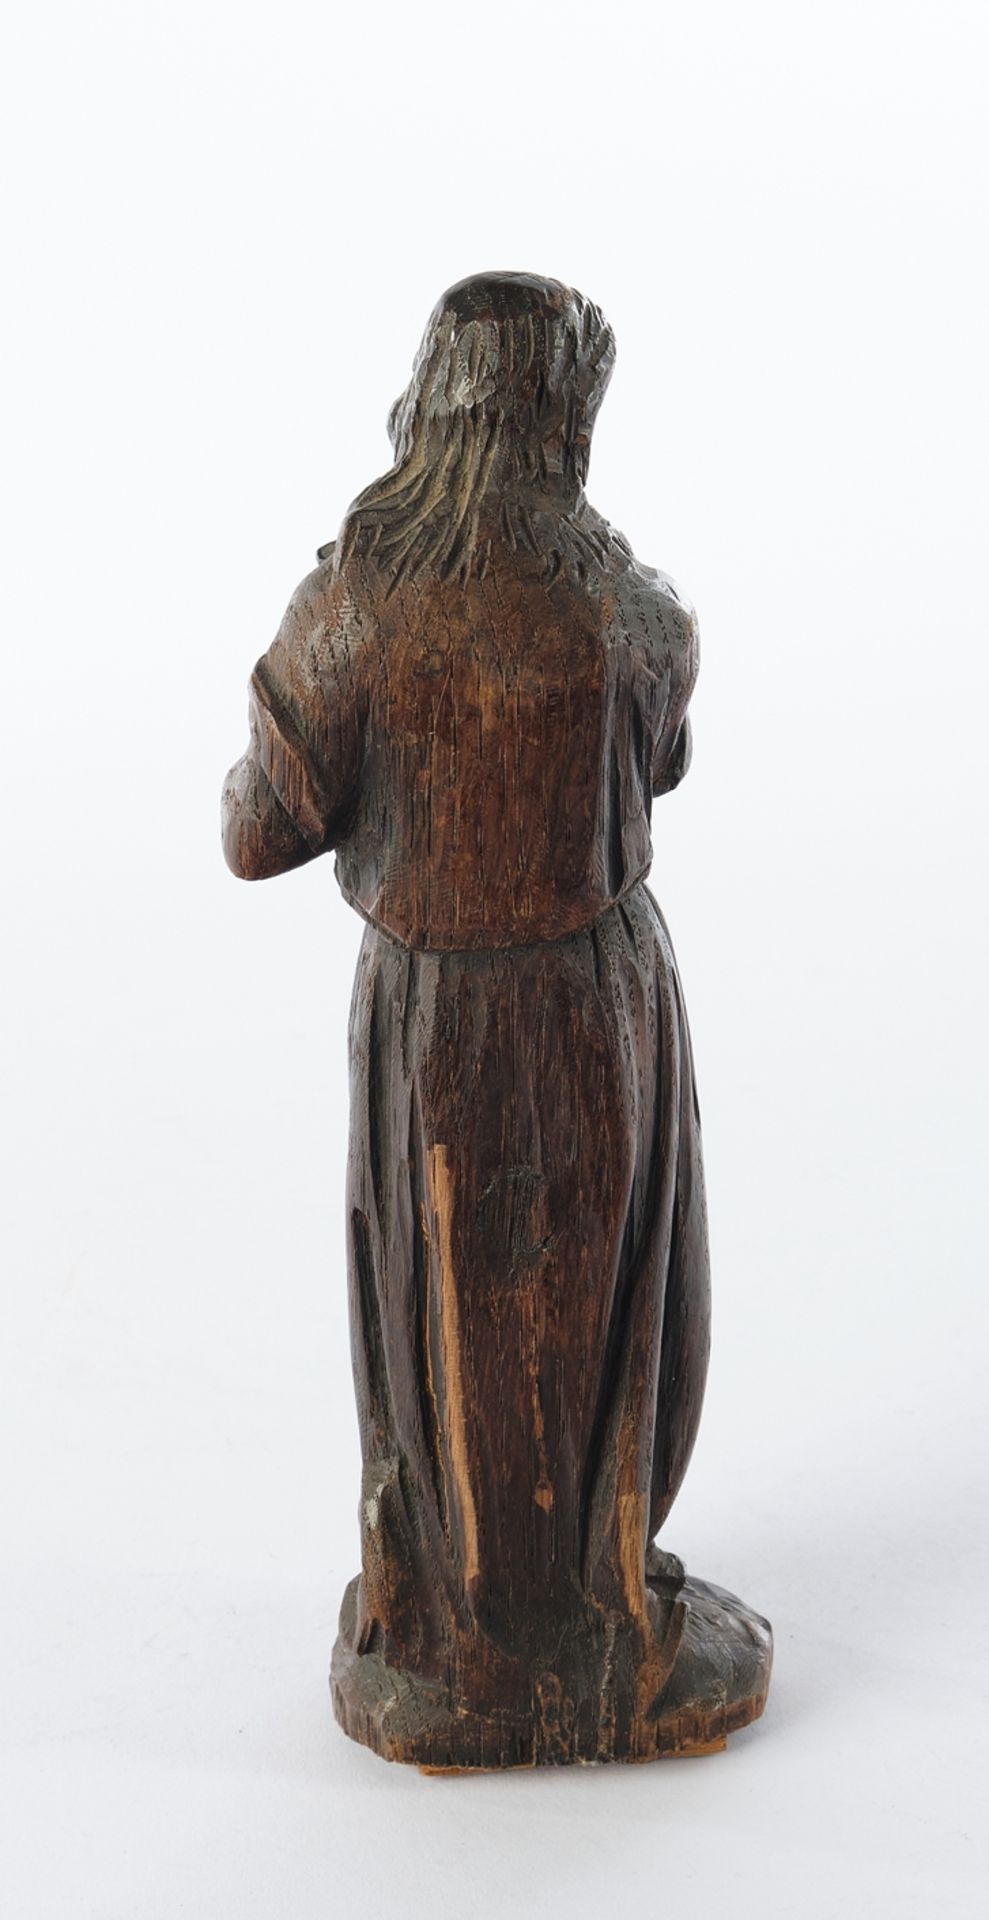 Skulptur, Holz geschnitzt, "Maria Magdalena", 18. Jh., 23 cm, dunkel gebeizt - Bild 3 aus 4